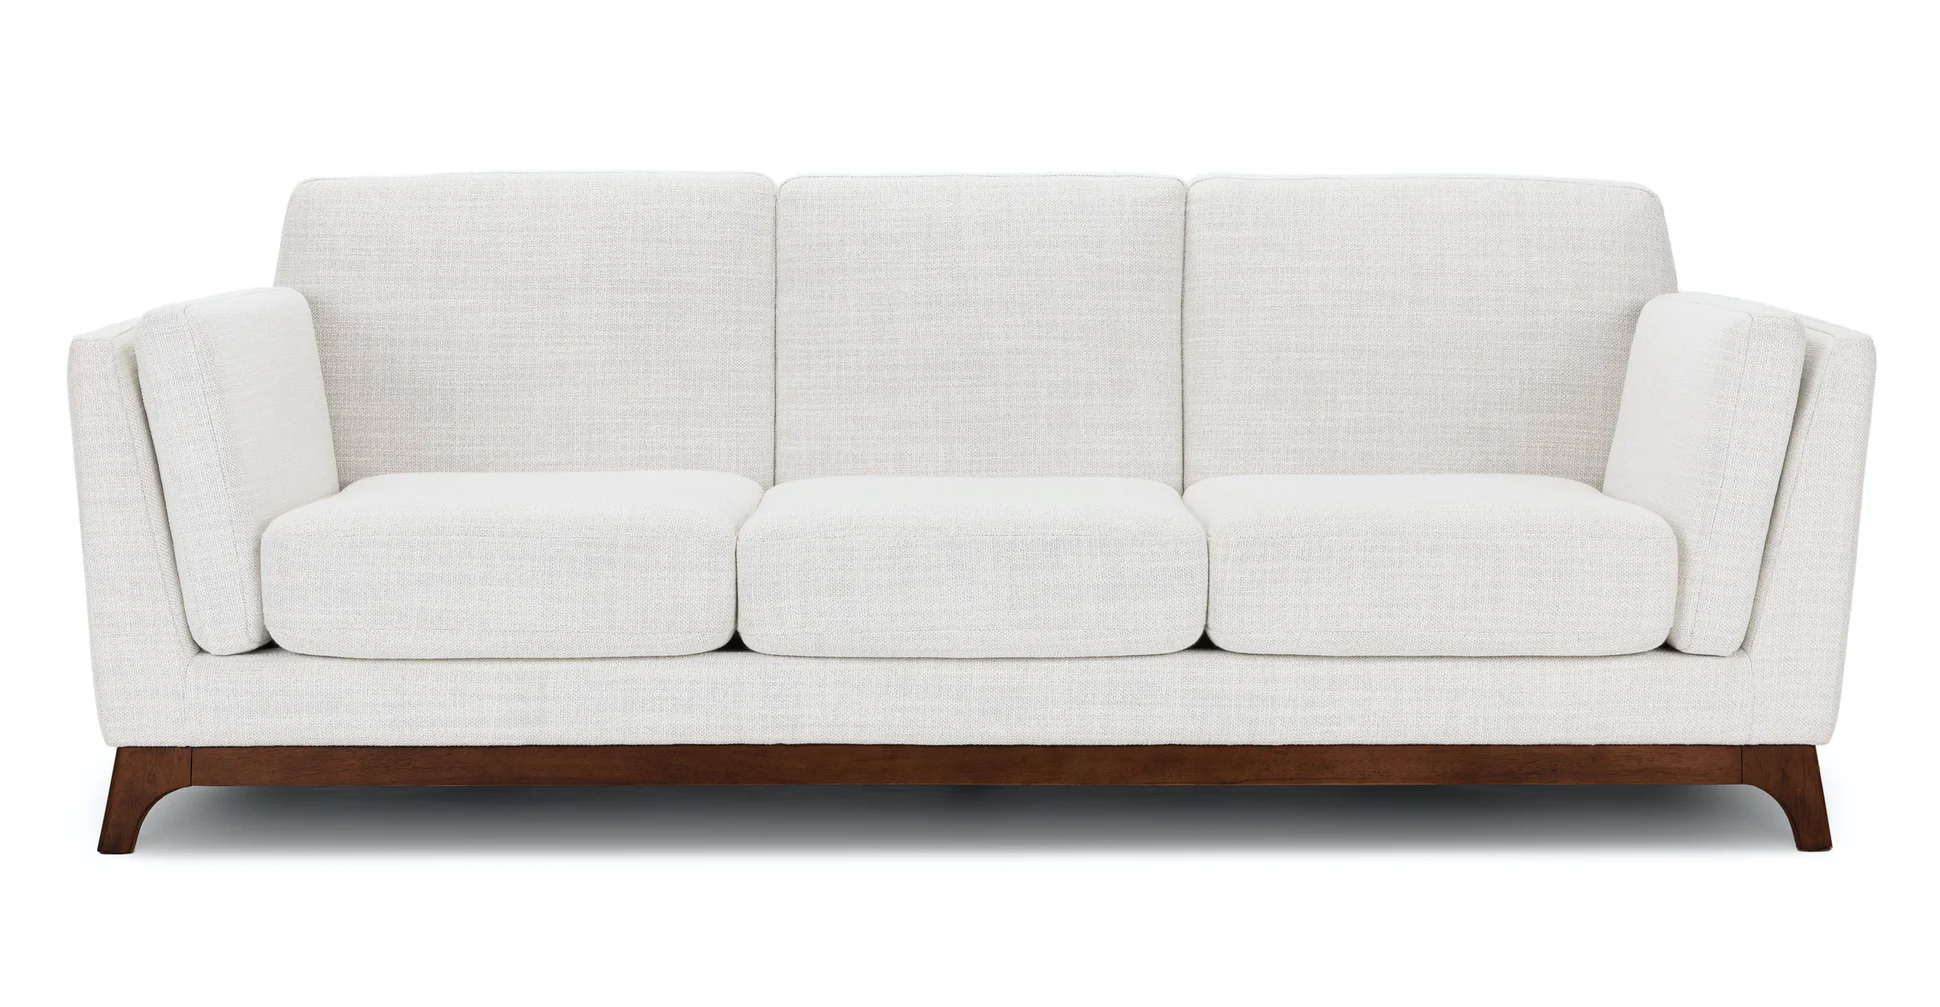 Article Ceni Fresh White Sofa Couch